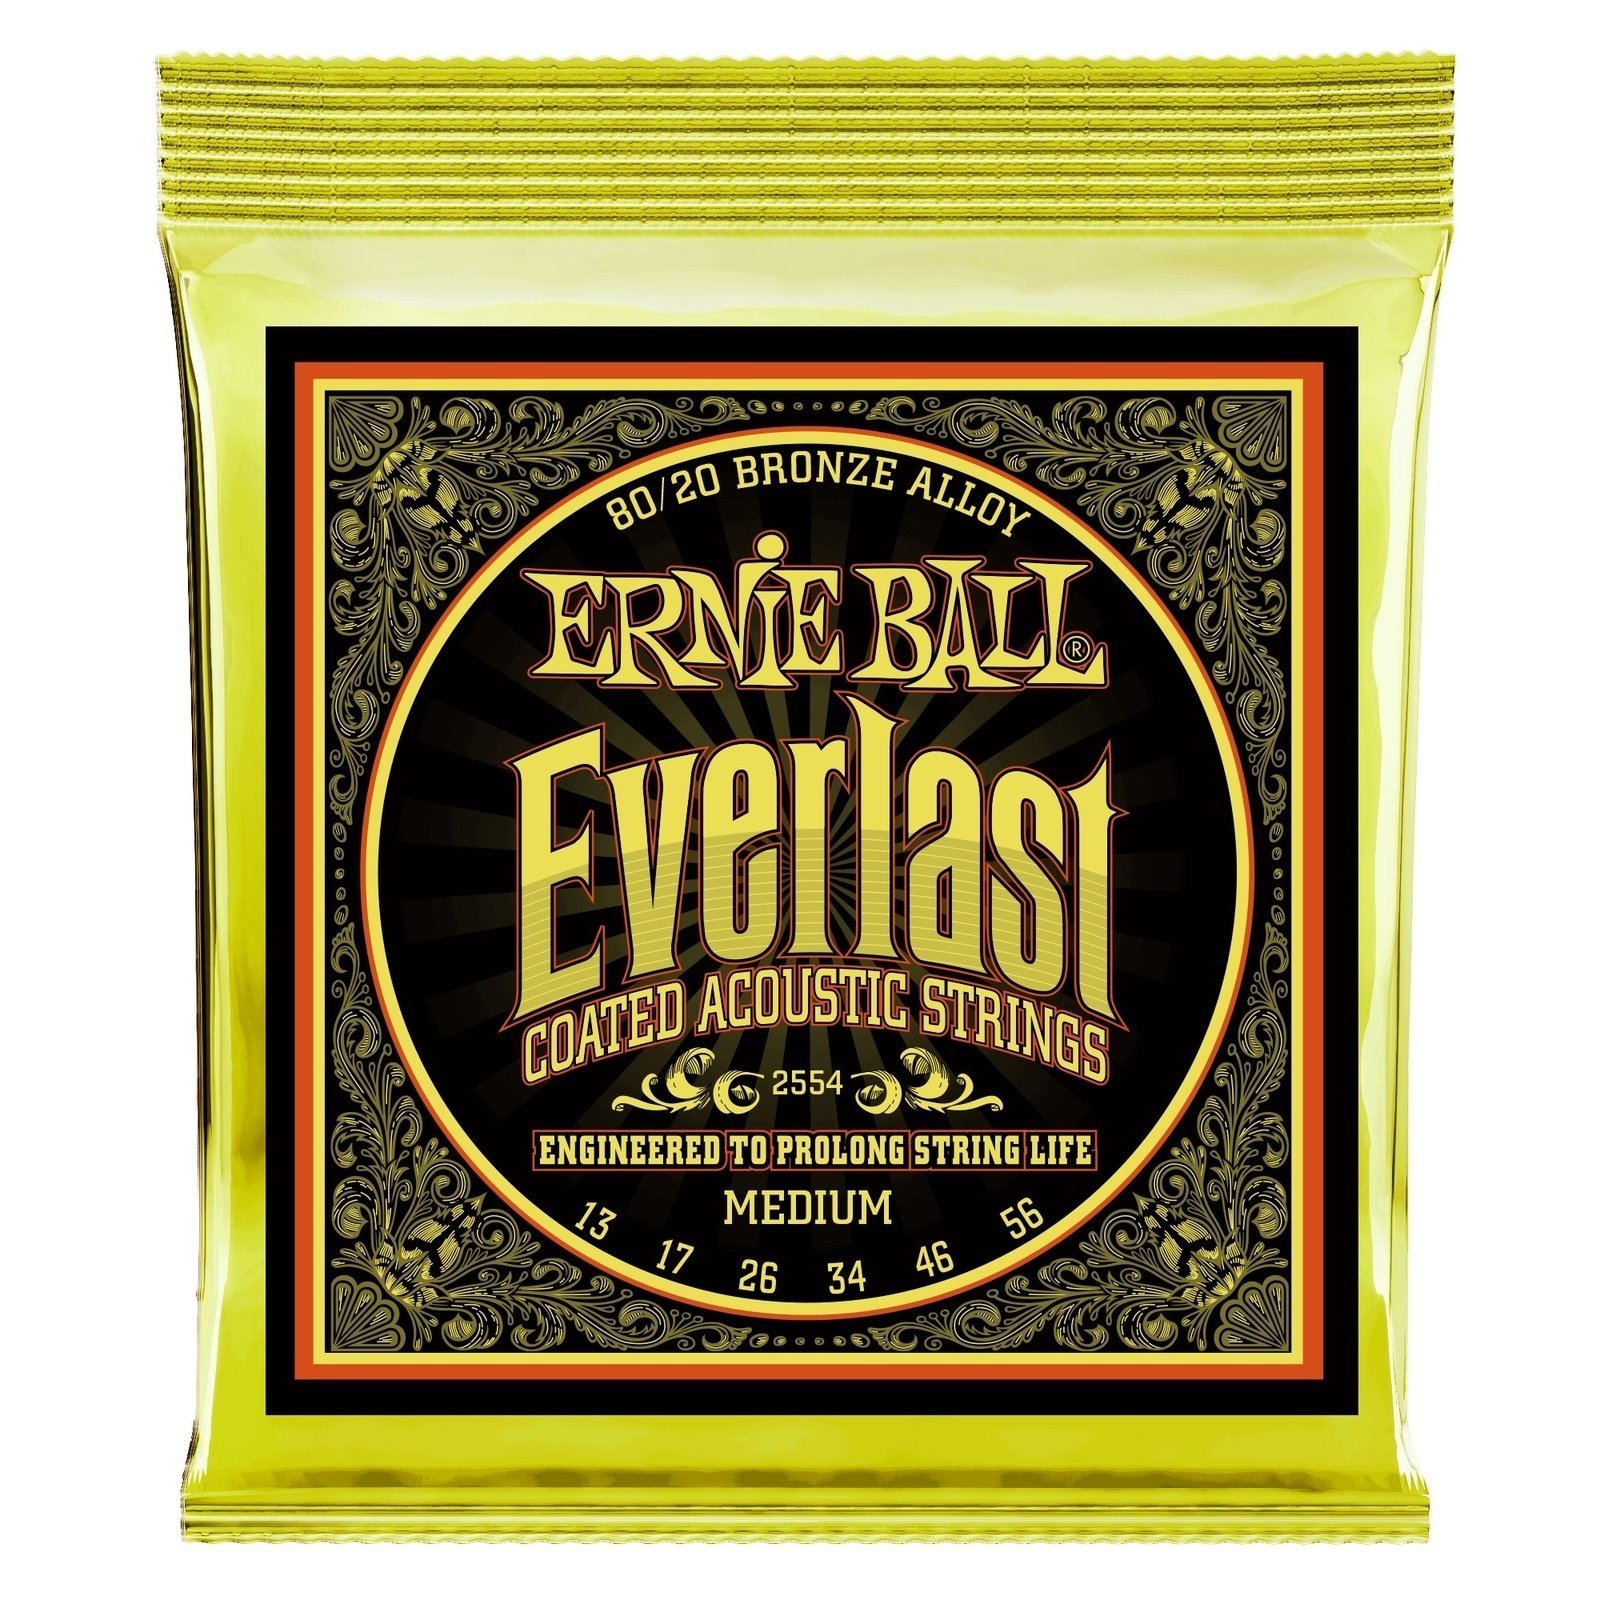 Guitar strings Ernie Ball 2554 Everlast